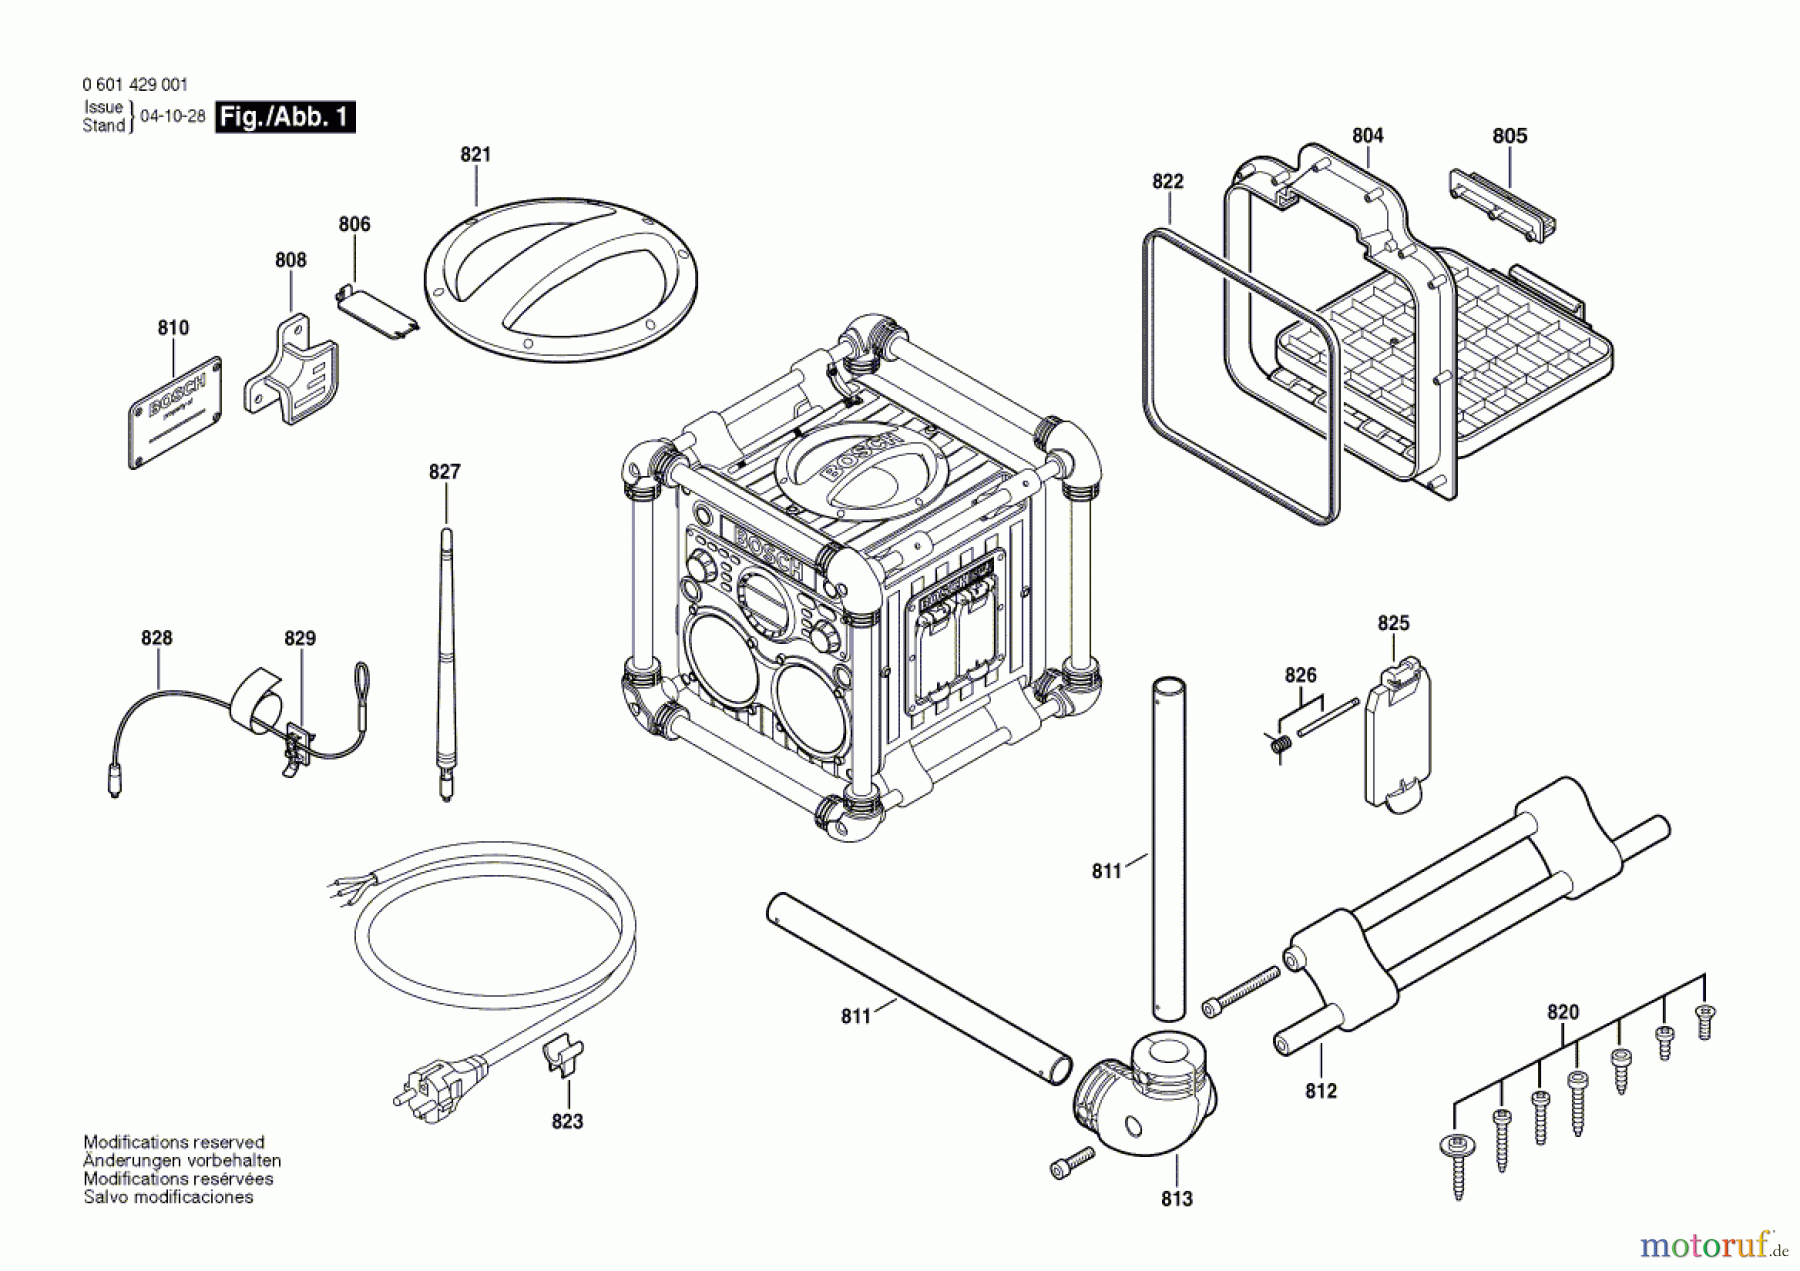  Bosch Werkzeug Radiobox GML 24 V Seite 1